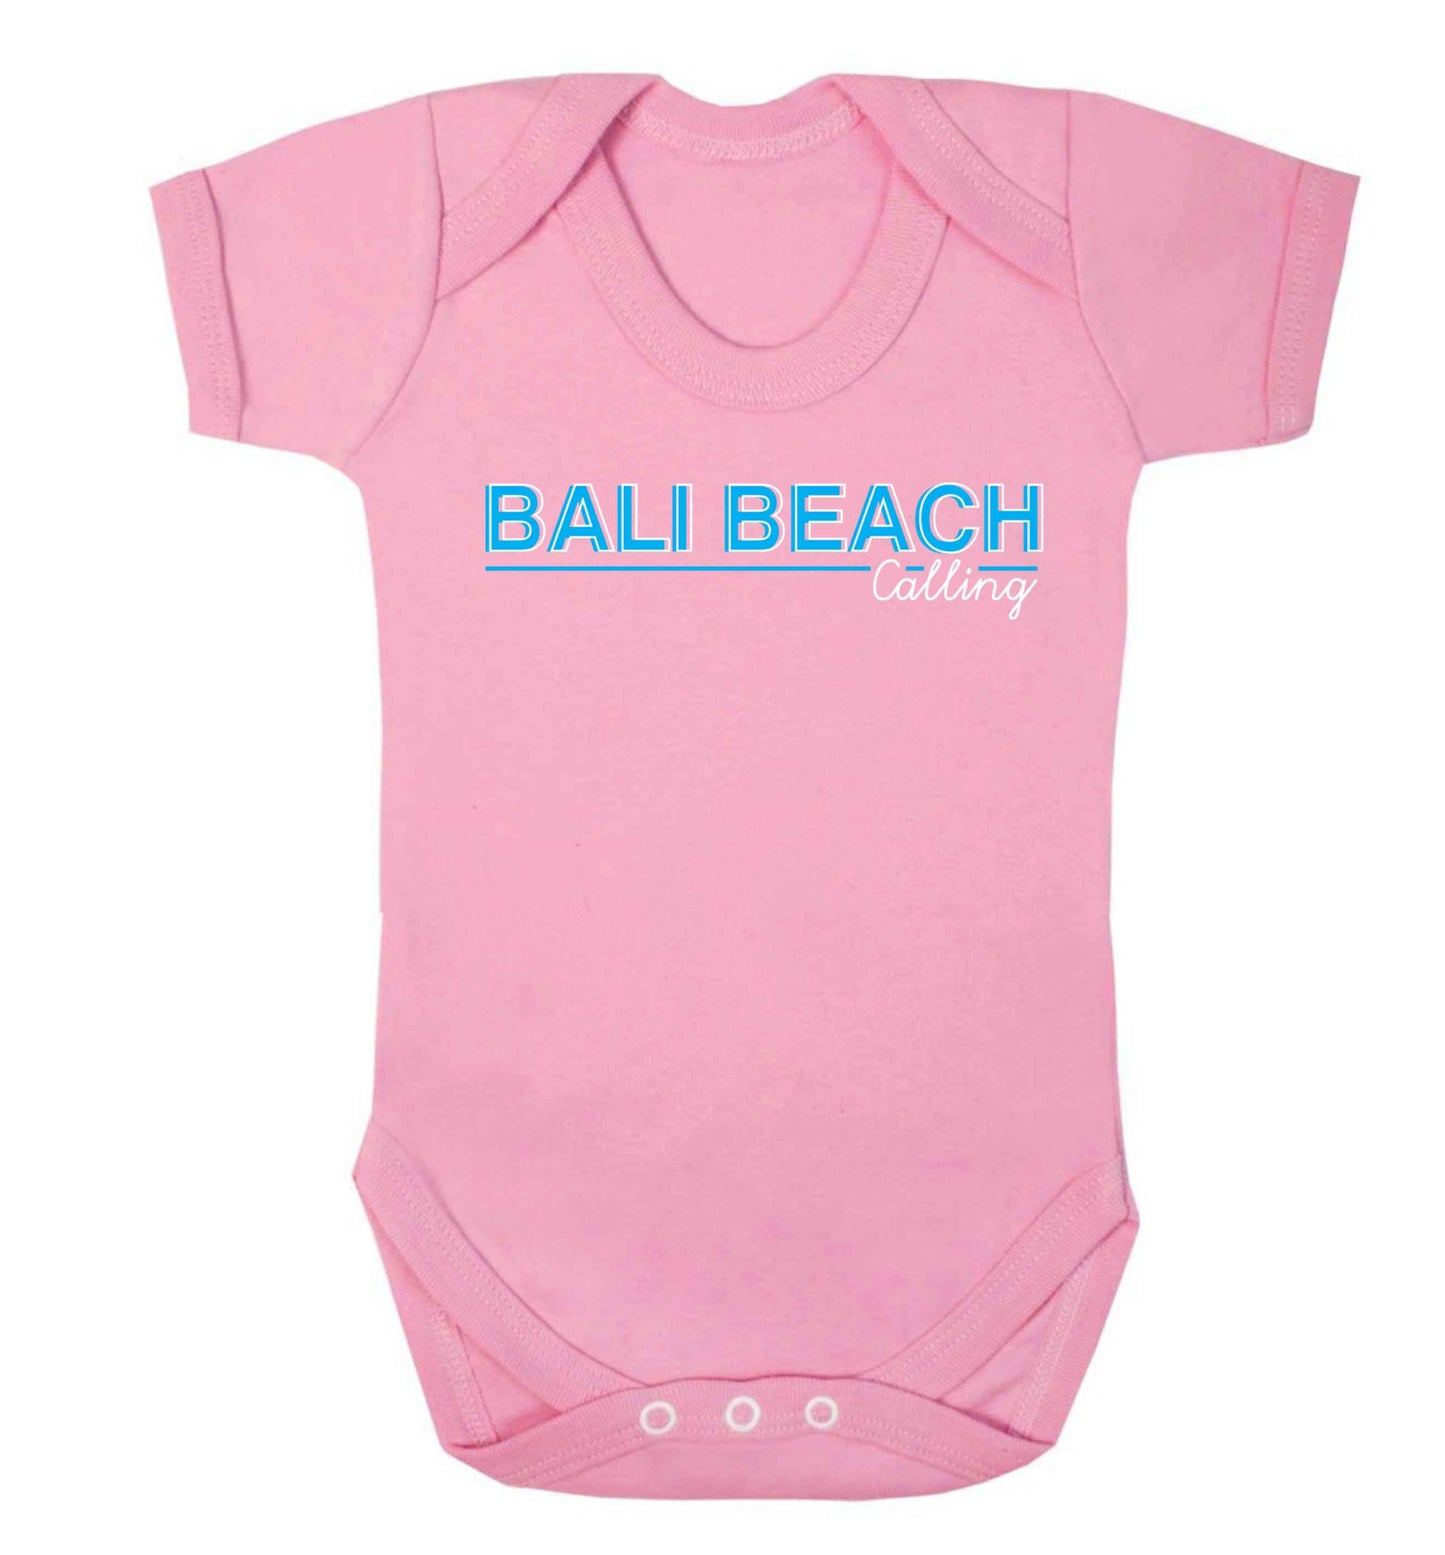 Bali beach calling Baby Vest pale pink 18-24 months